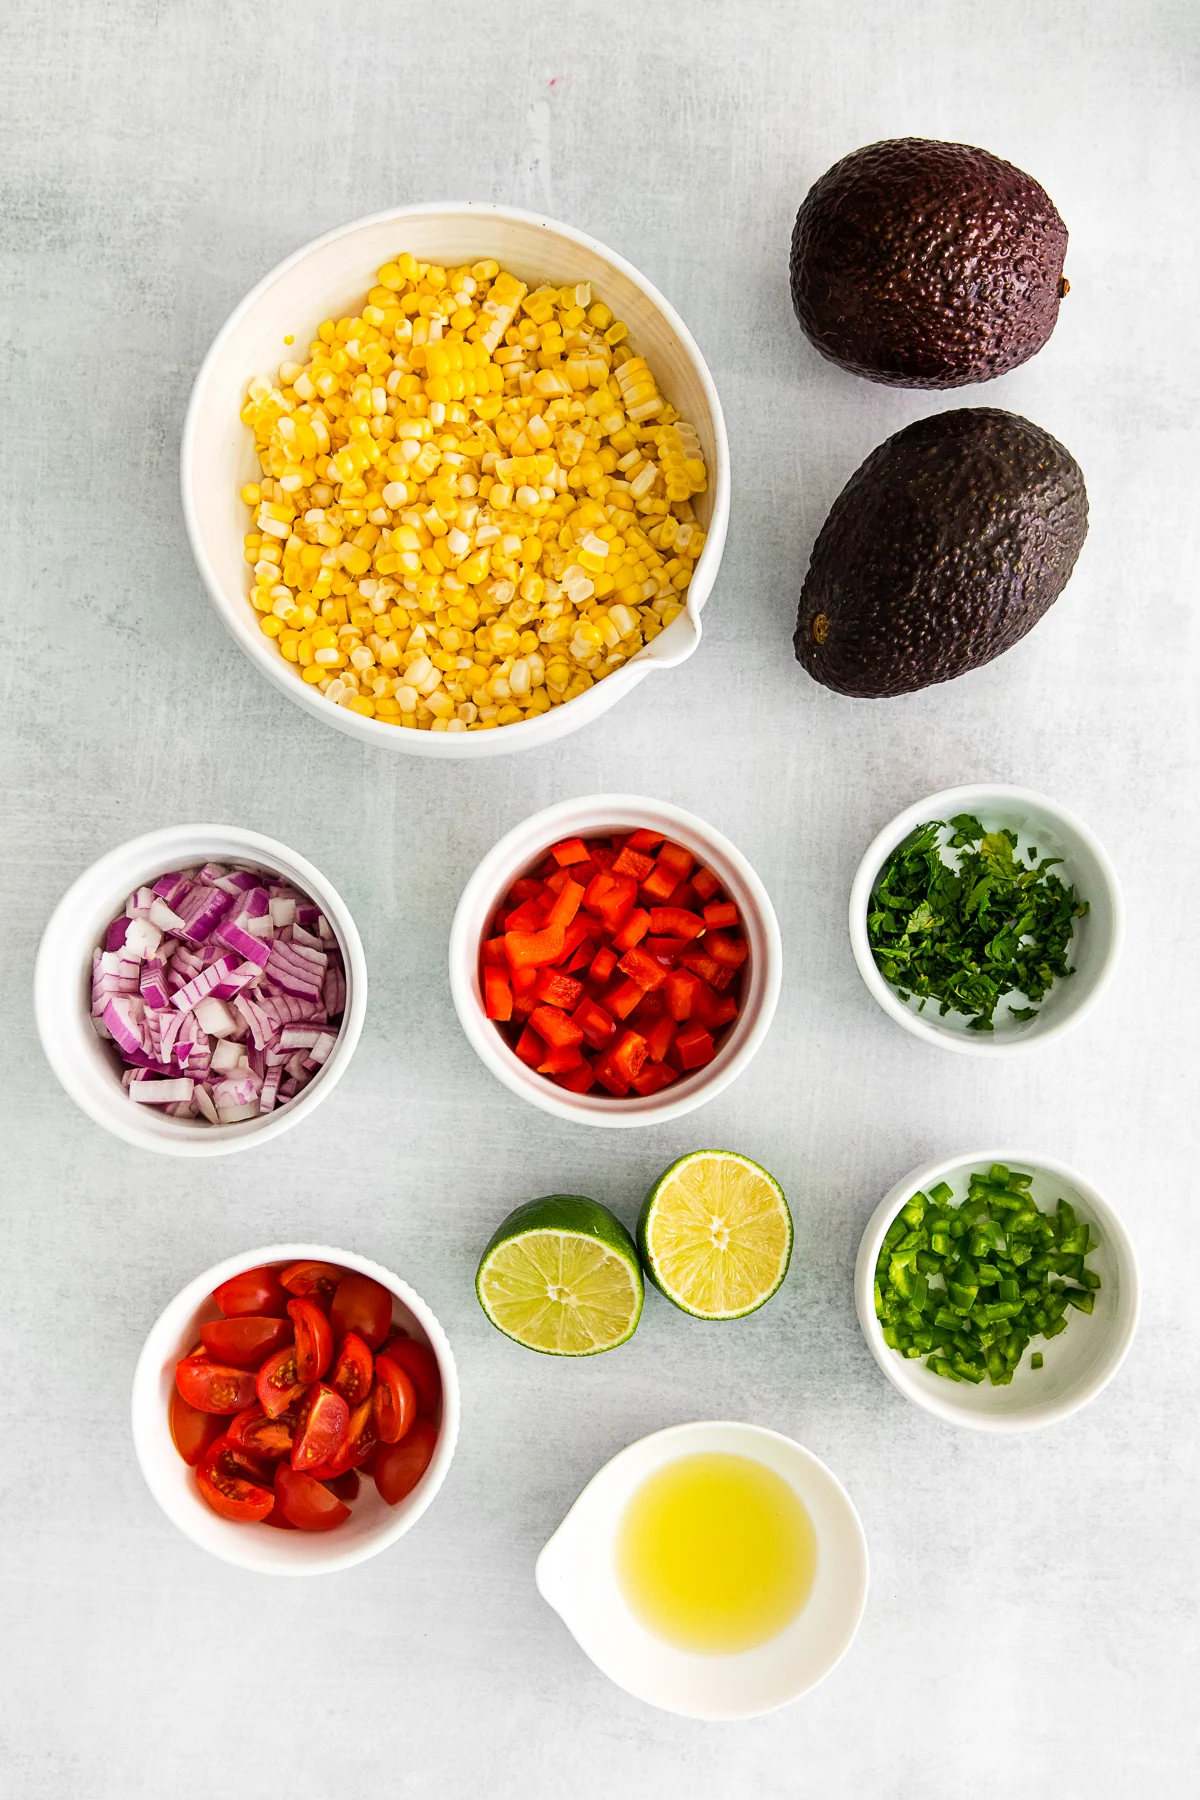 Ingredients to make Avocado Corn Salad. 